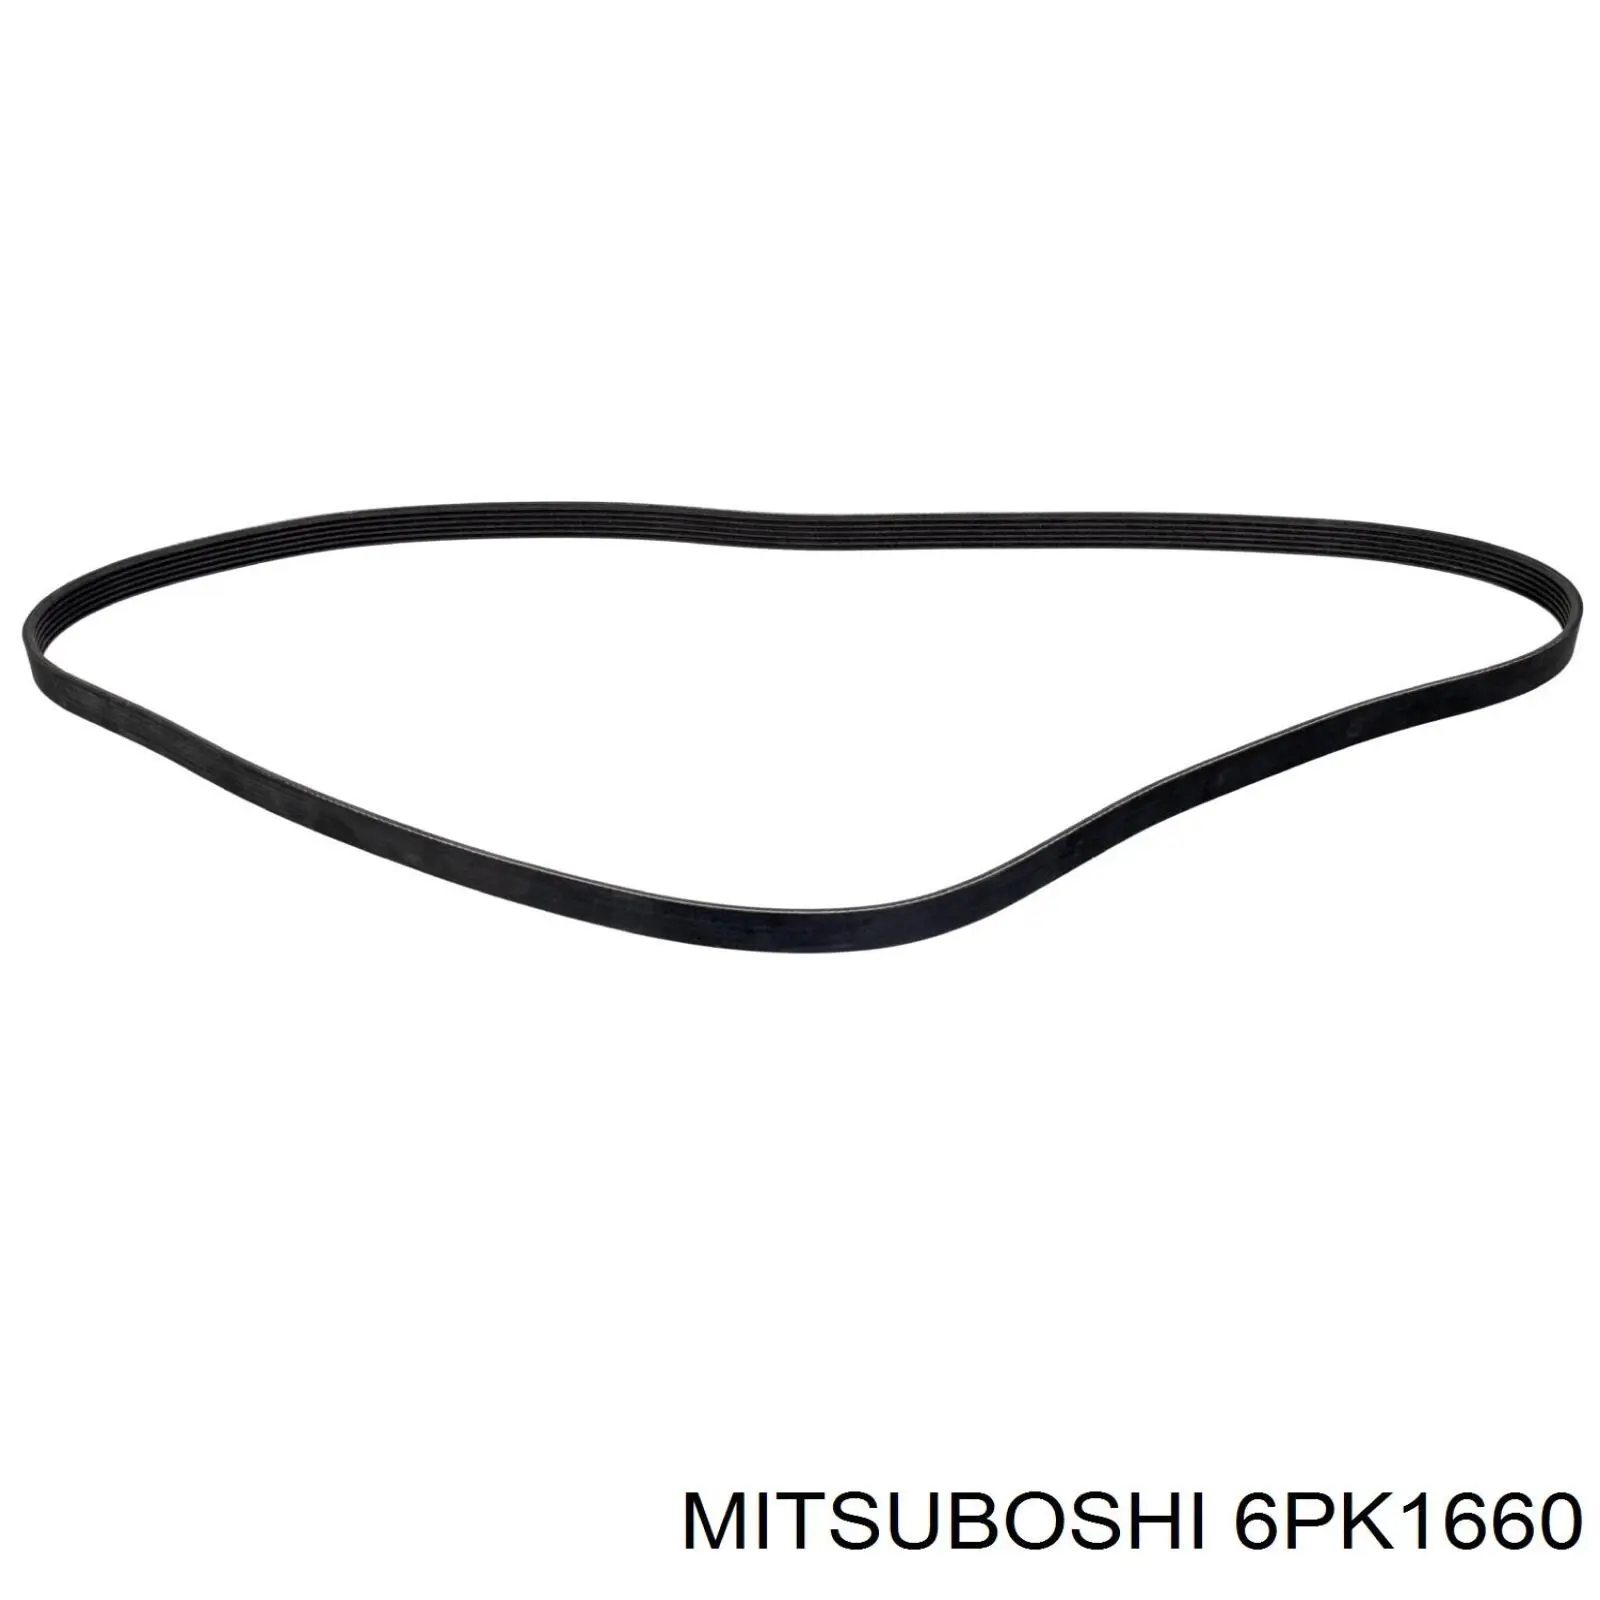 6PK1660 Mitsuboshi correa trapezoidal